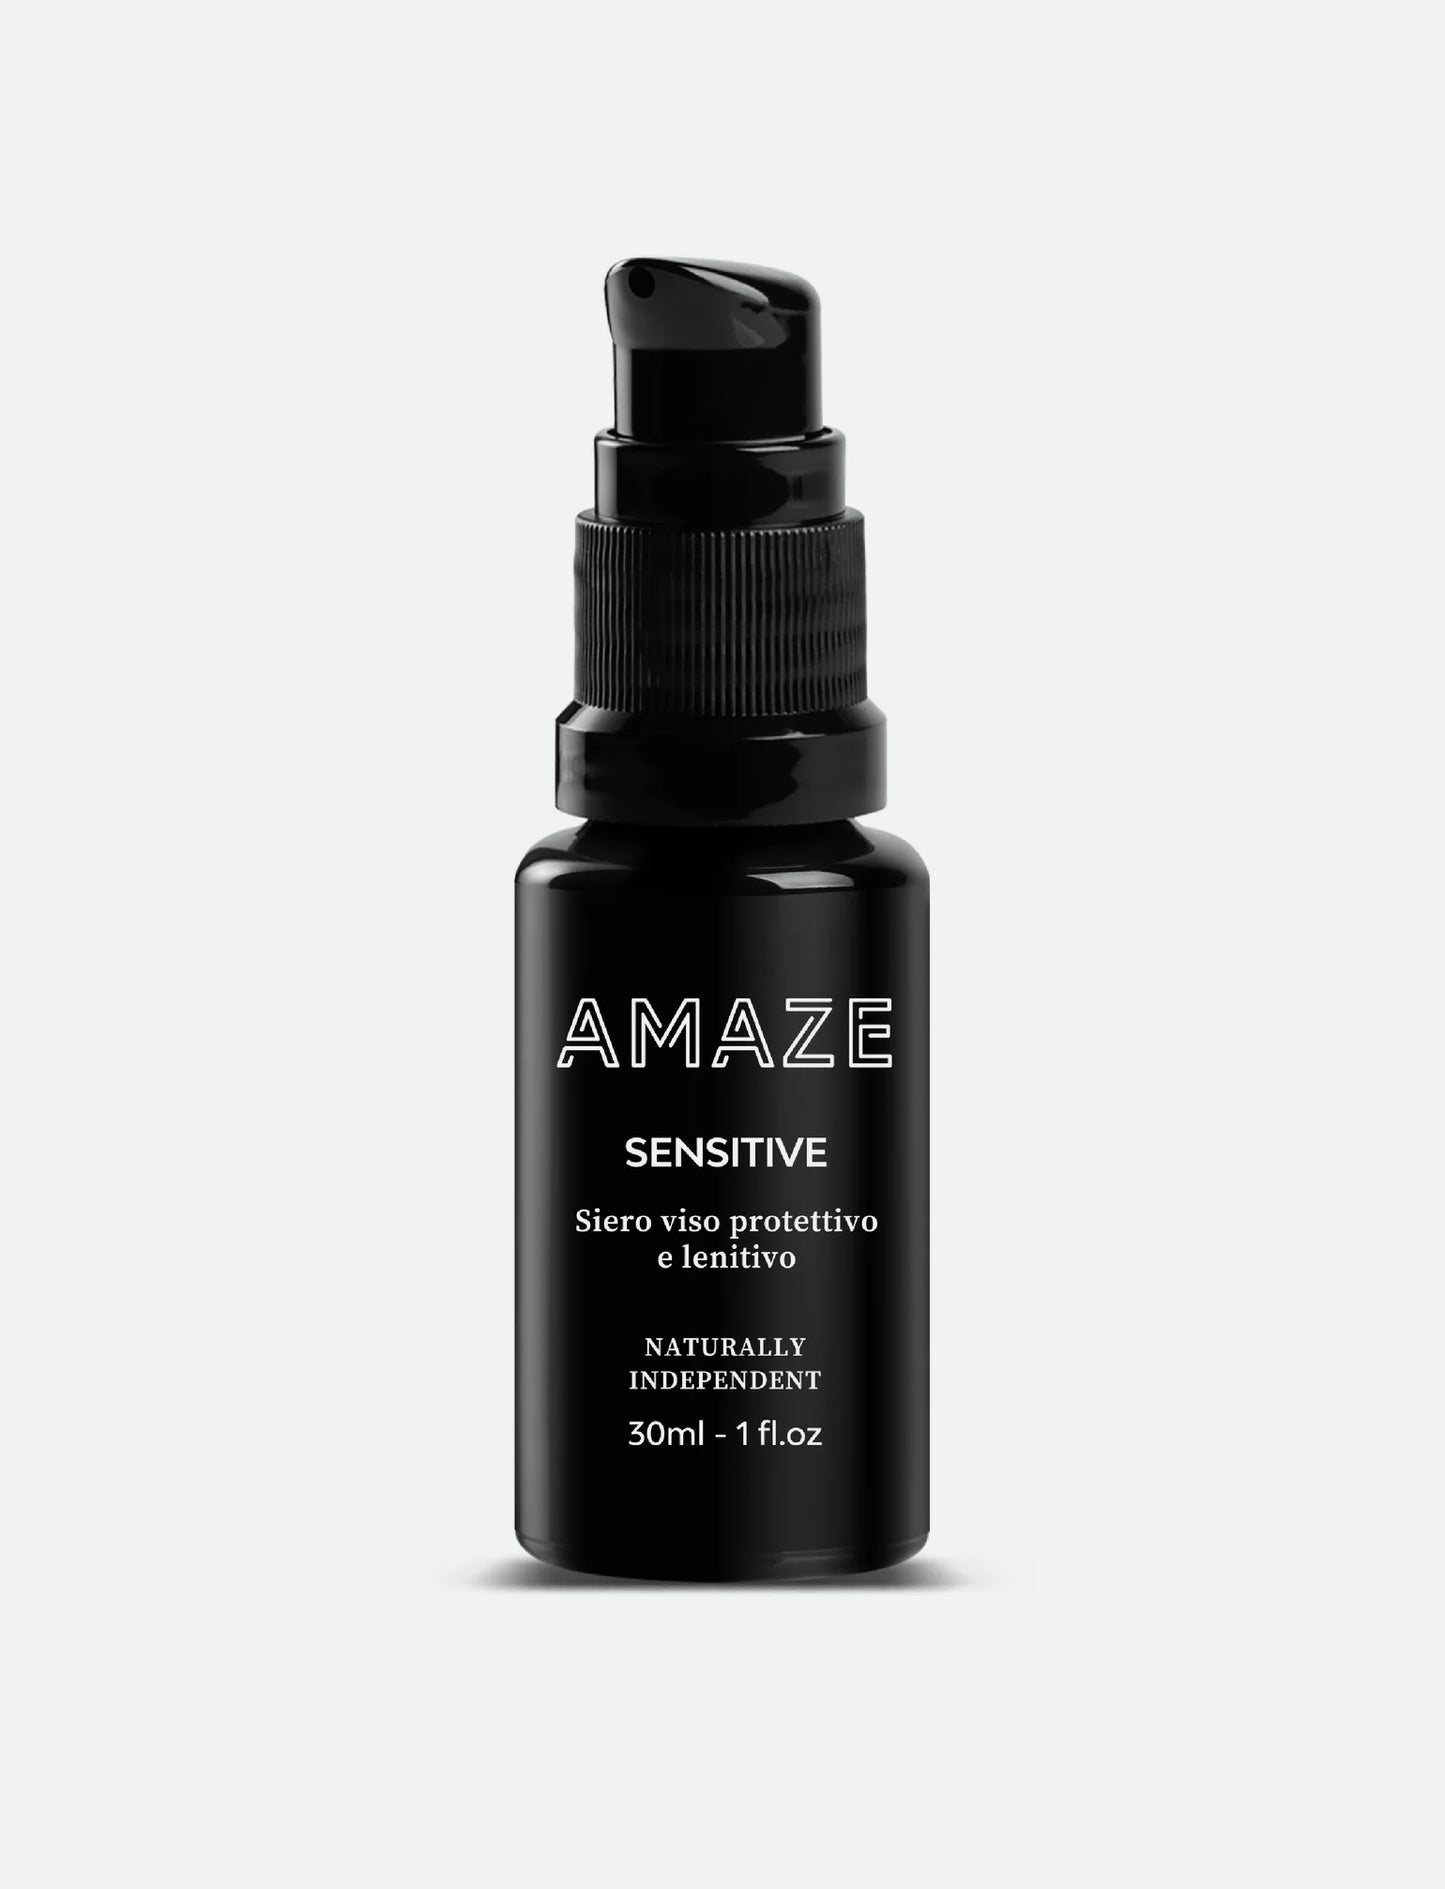 Amaze Sensitive Sensitive Skin Protection Serum